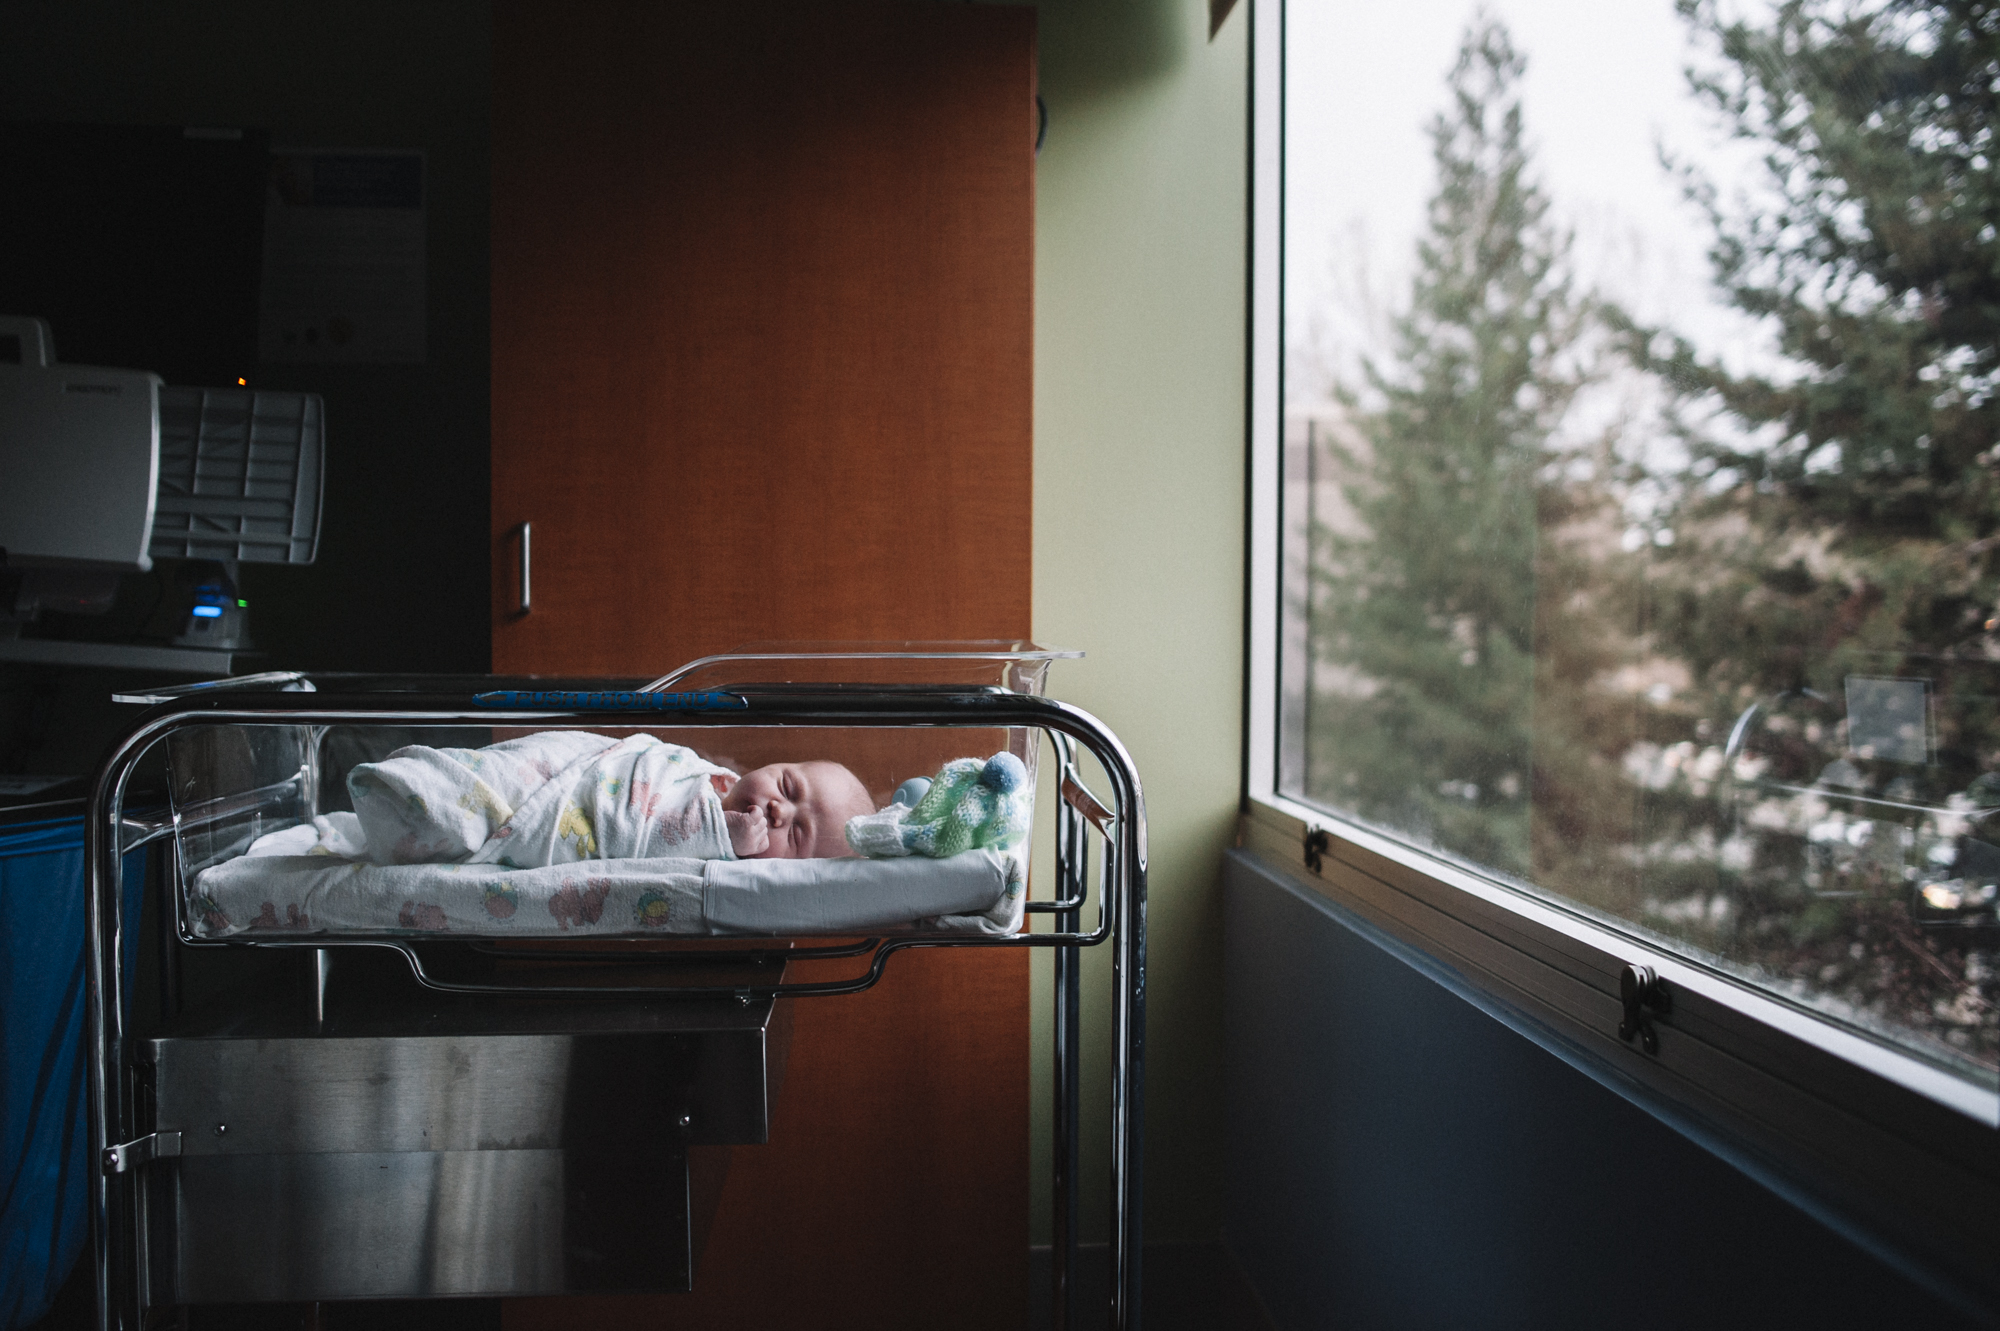 San Diego Newborn Lifestyle Hospital Photography